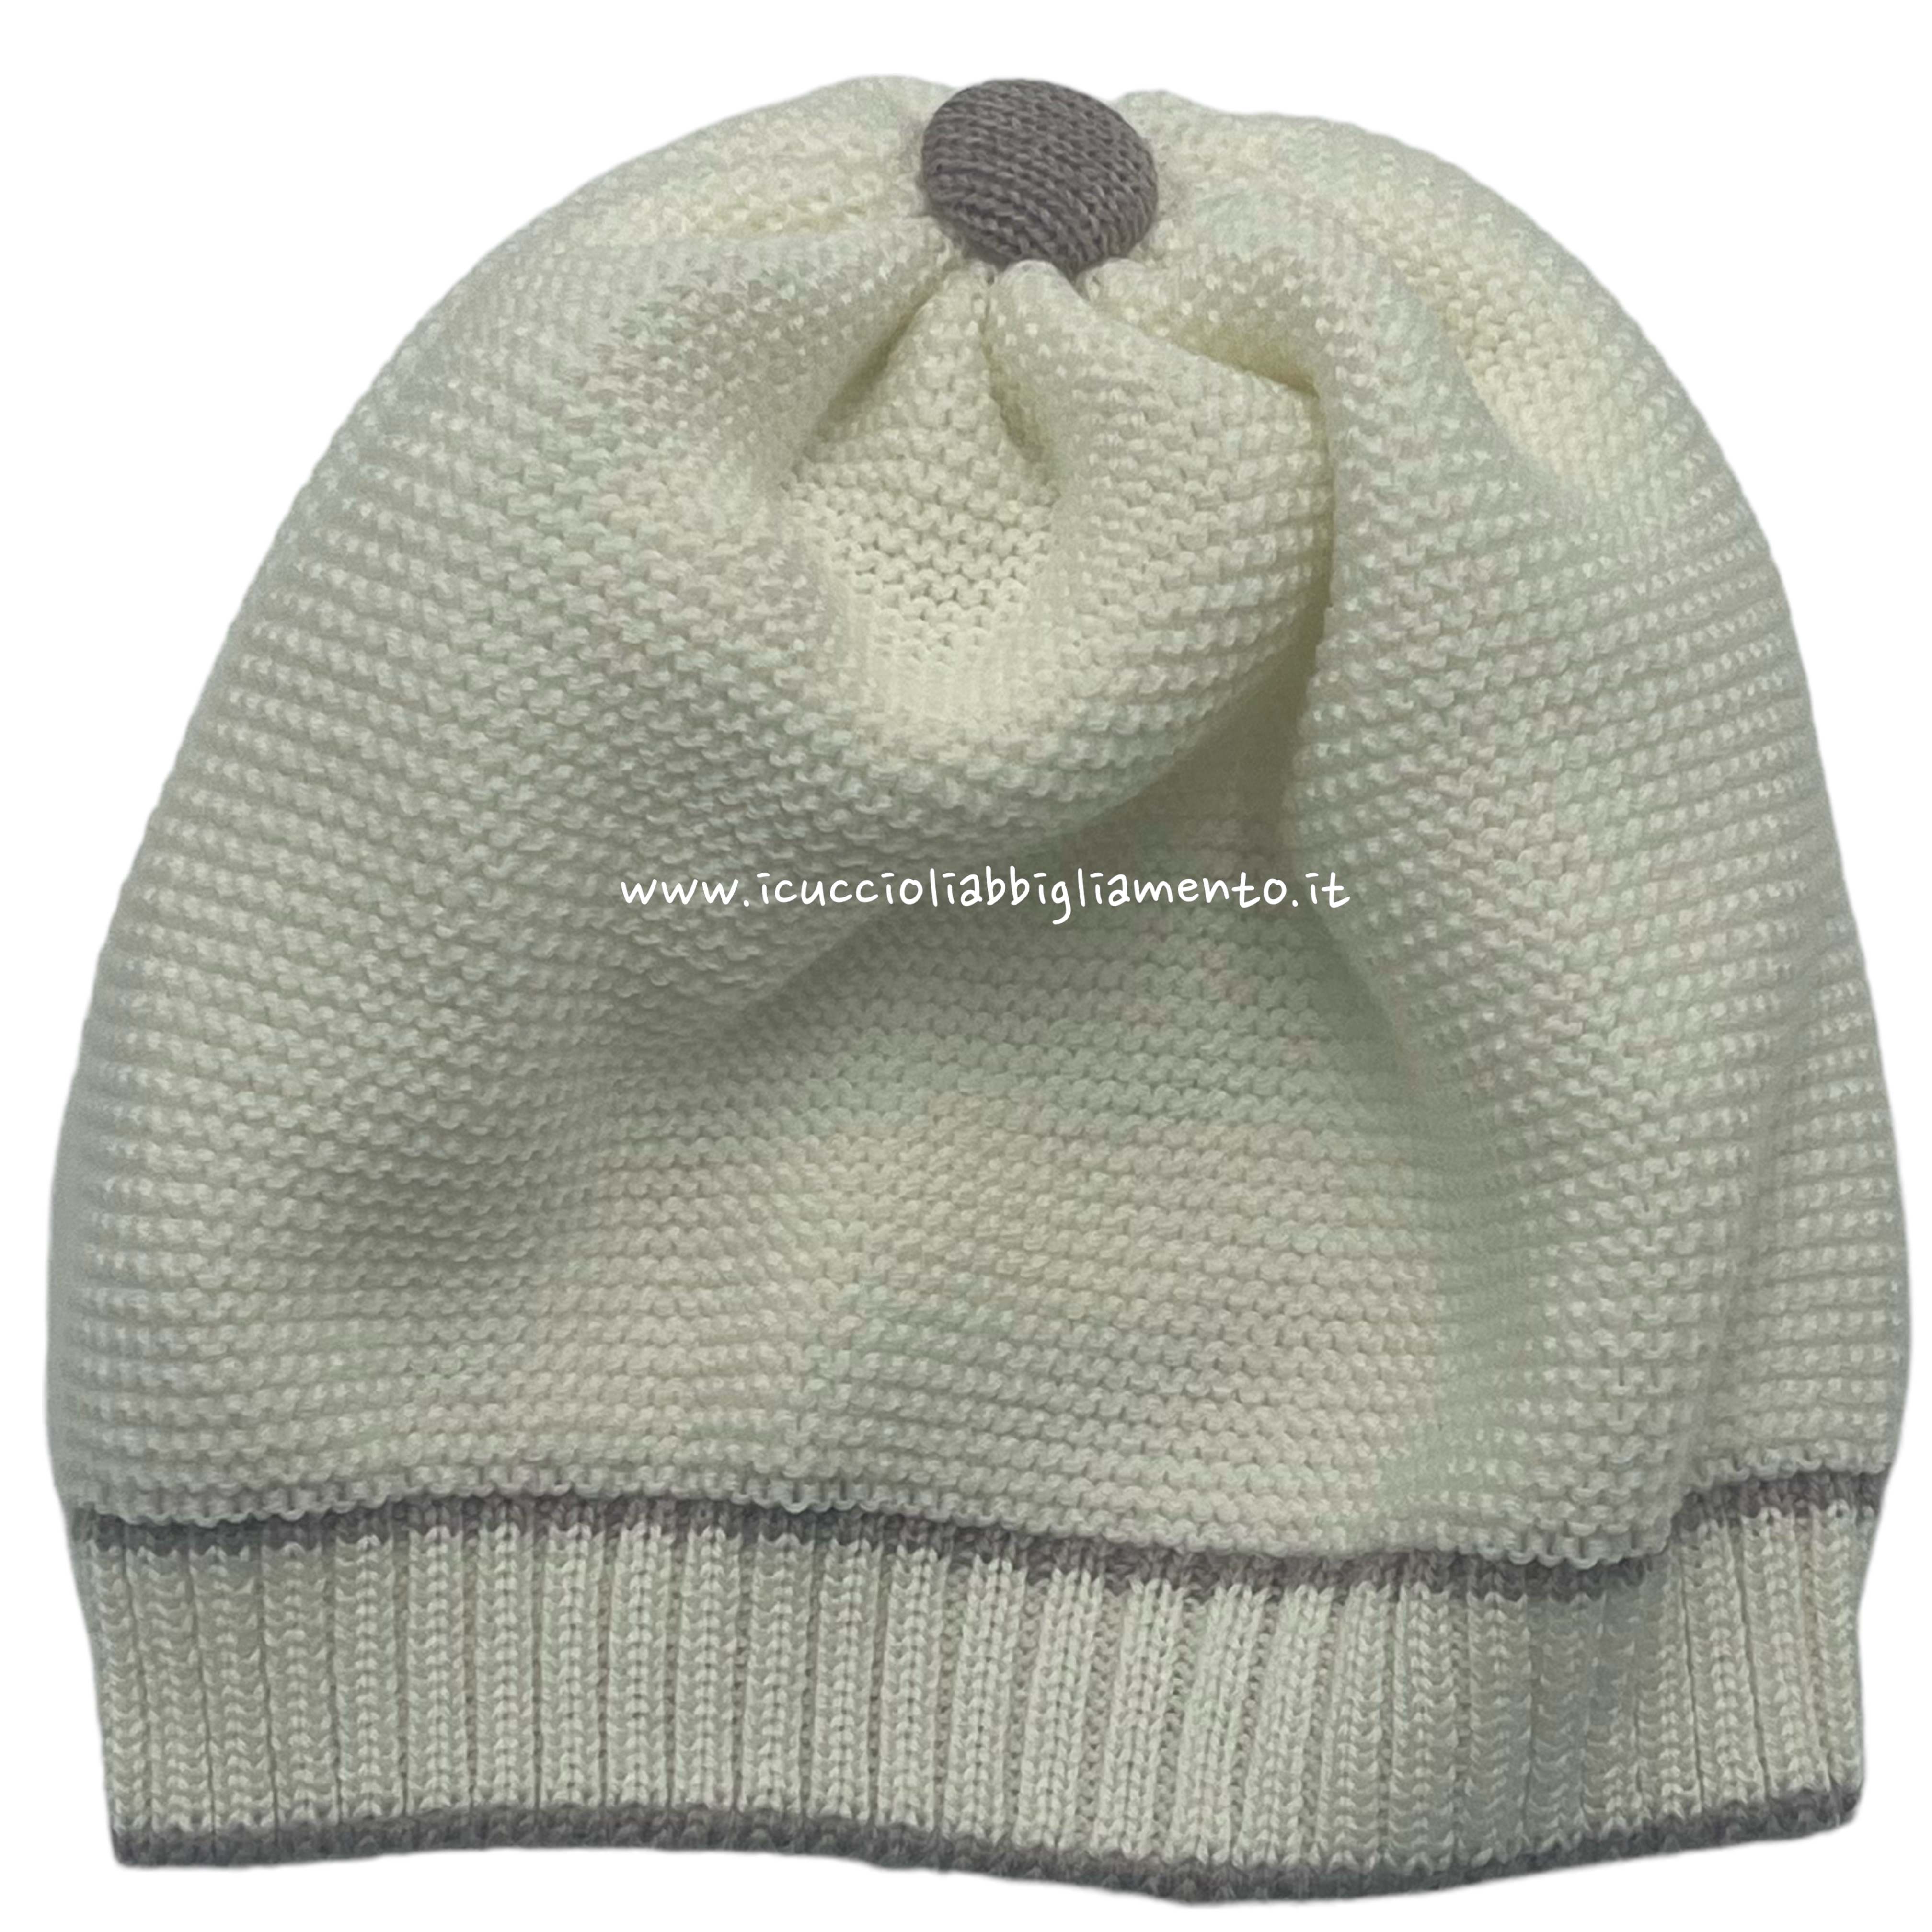 Cappello in lana art.8471